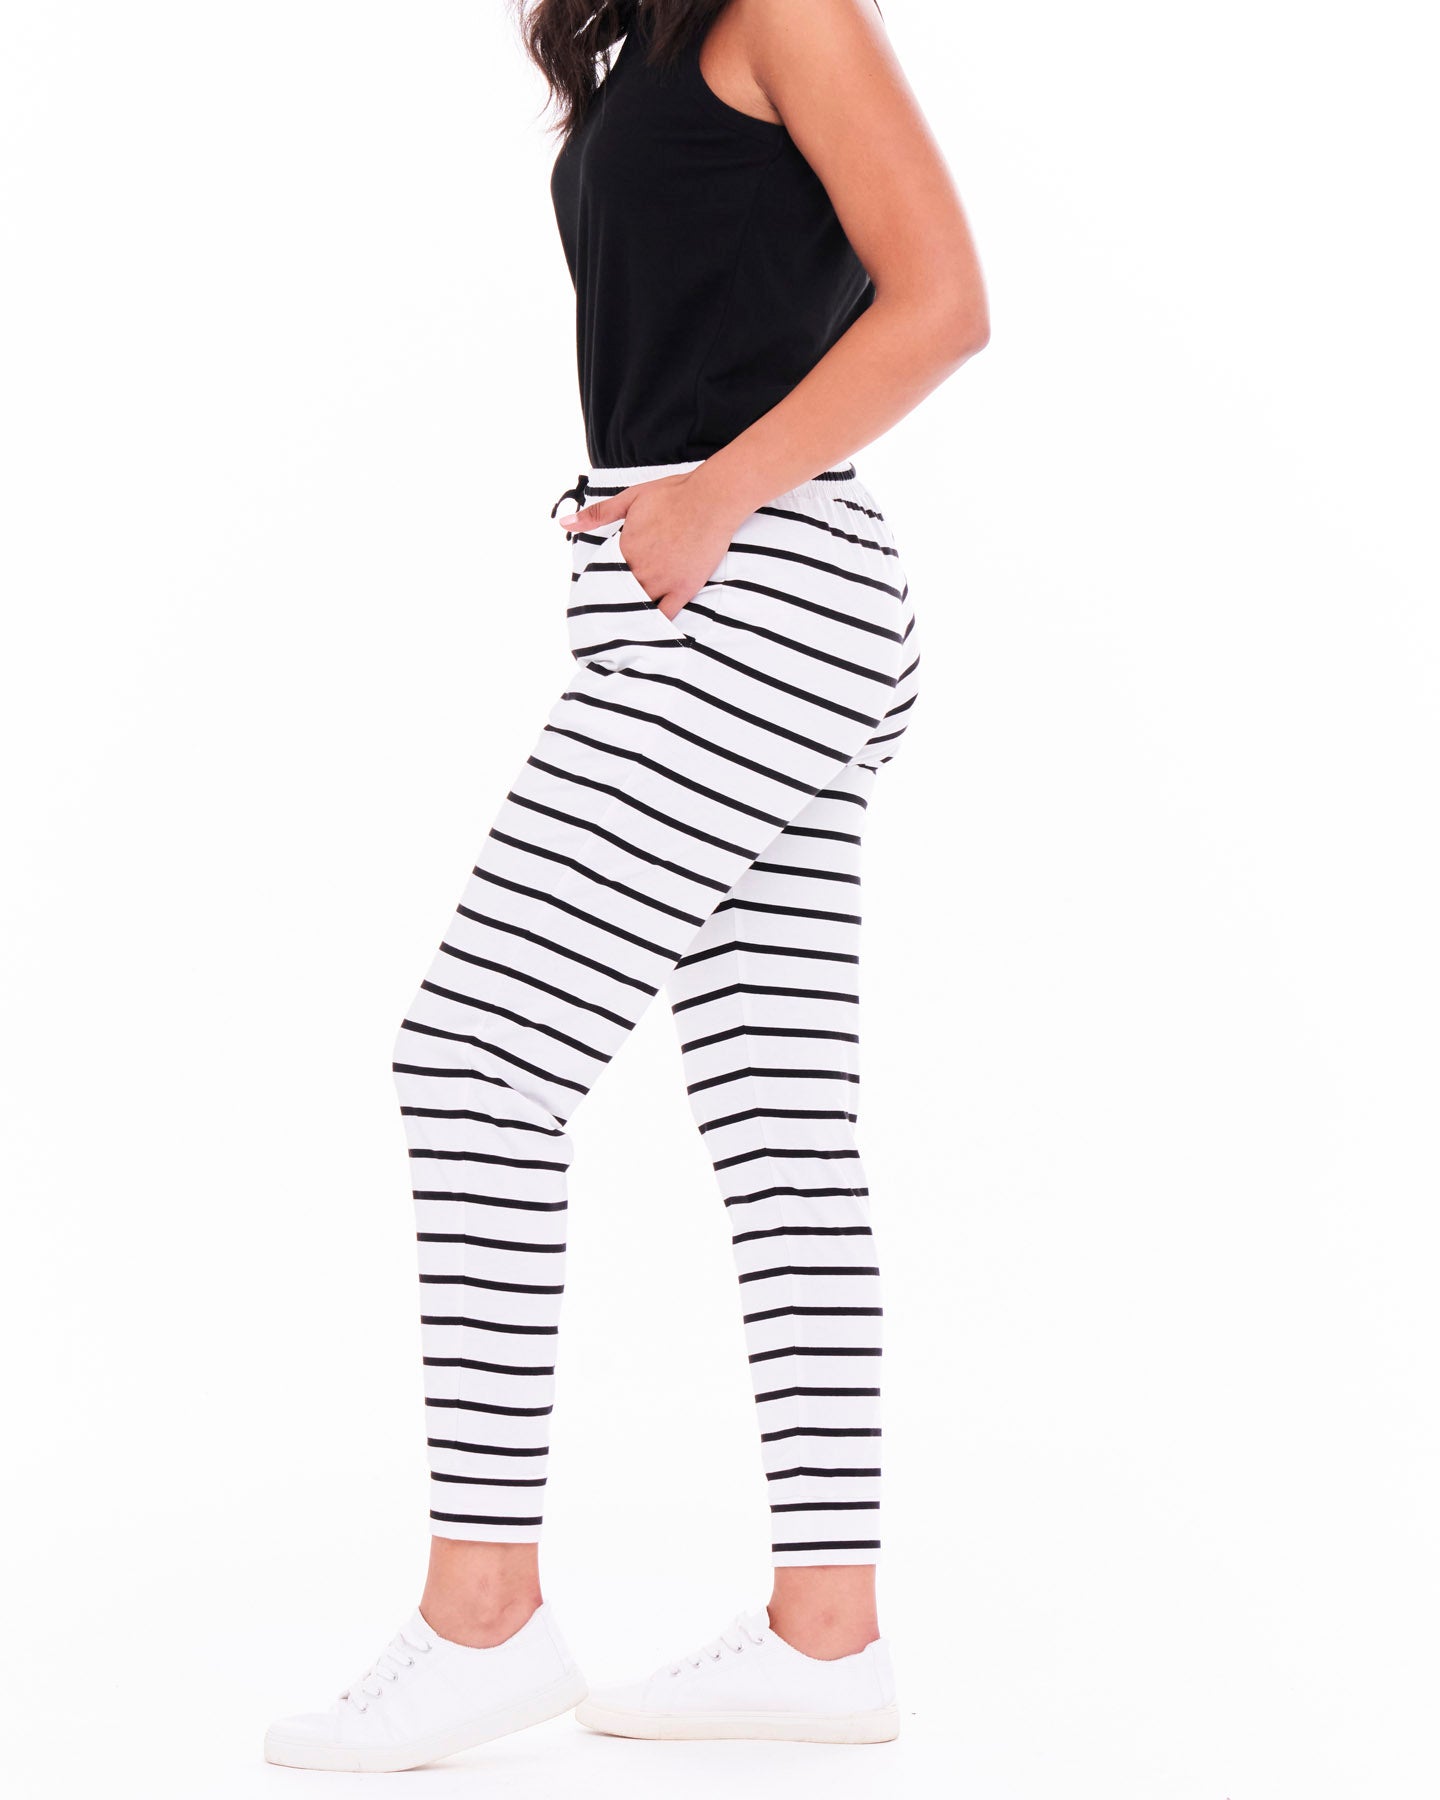 ASOS DESIGN skinny suit pants in black and white pin stripe | ASOS